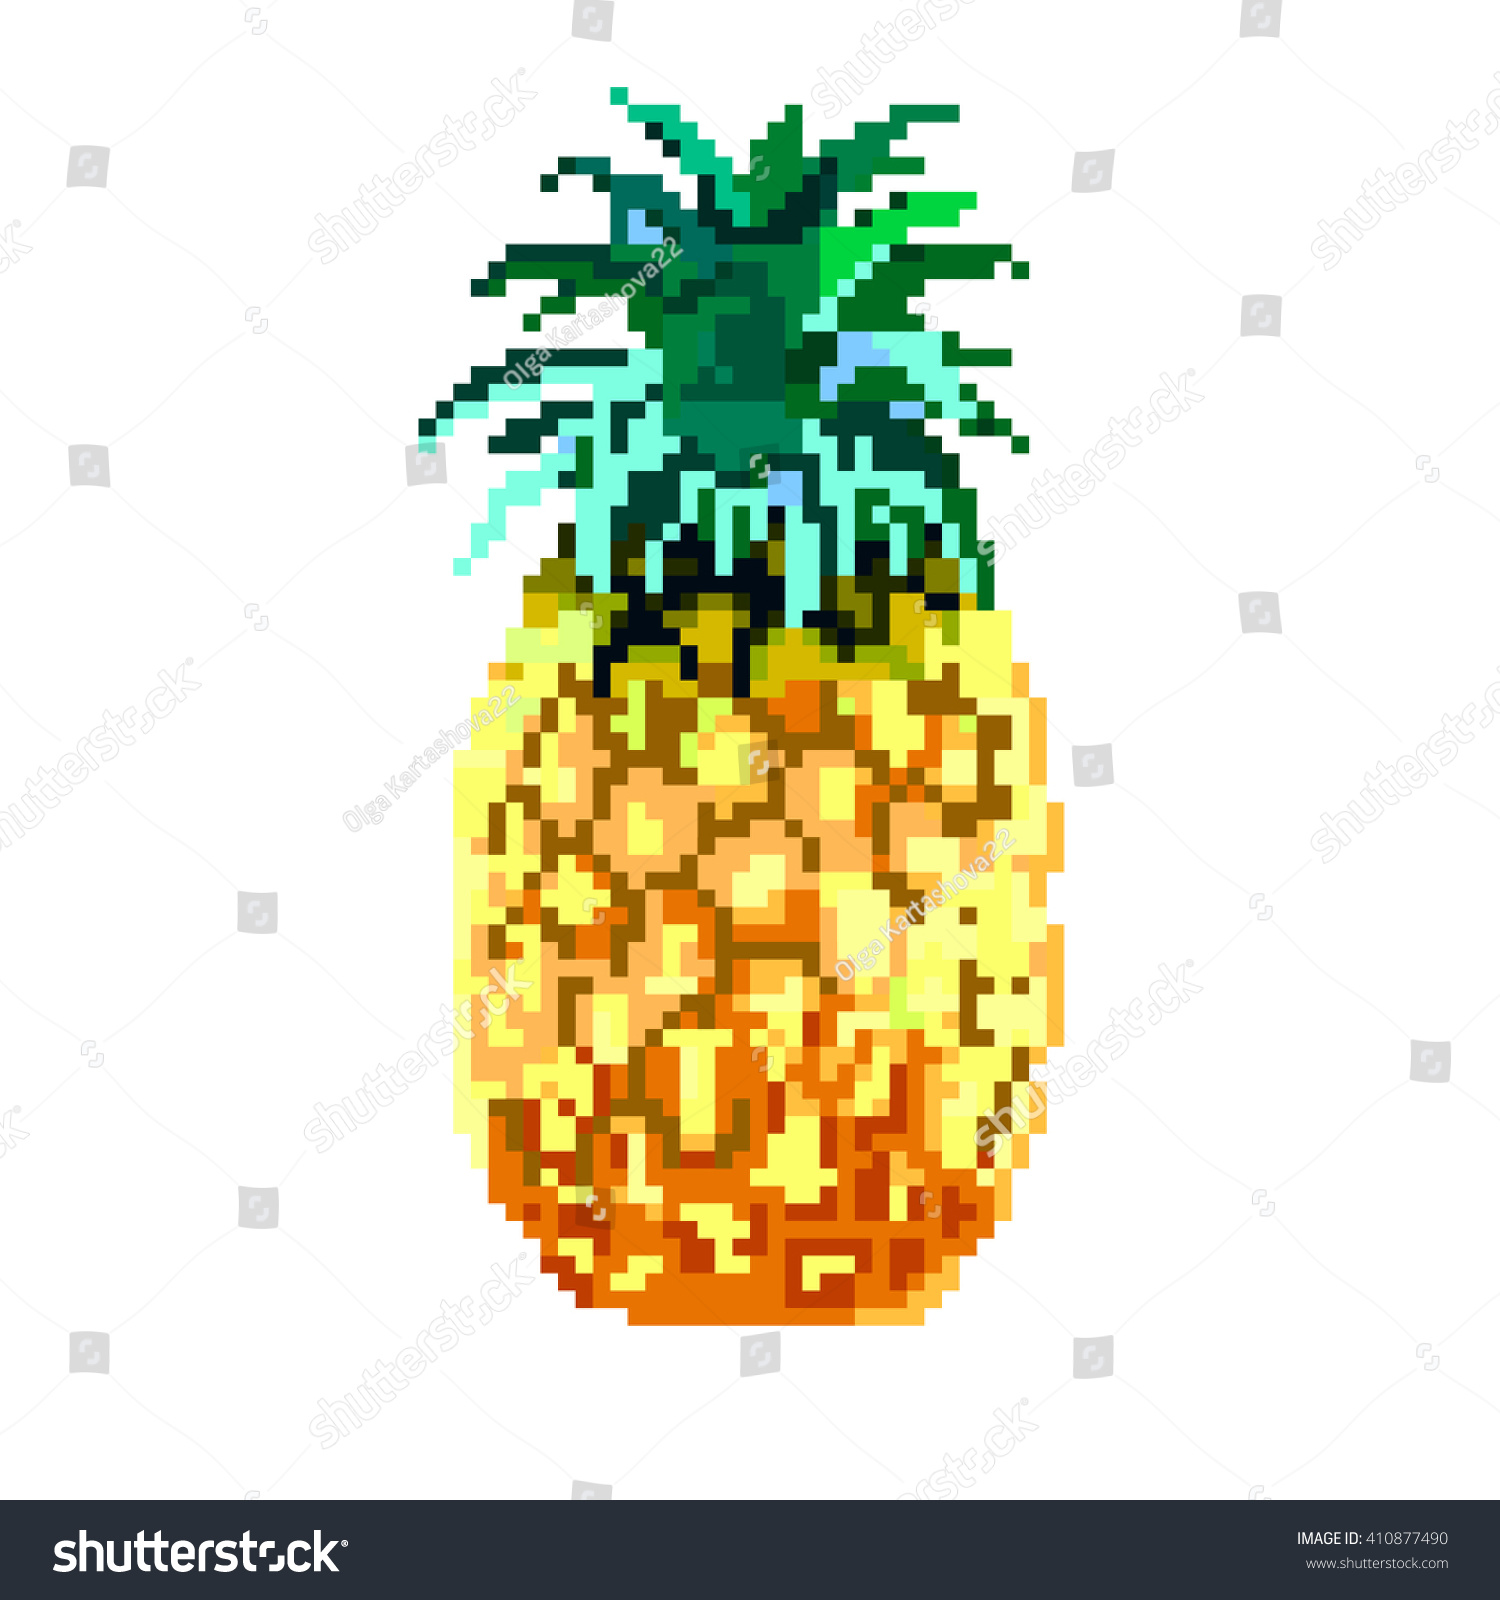 Pineapple Pixel Image Pixel Pineapple Stock Photo